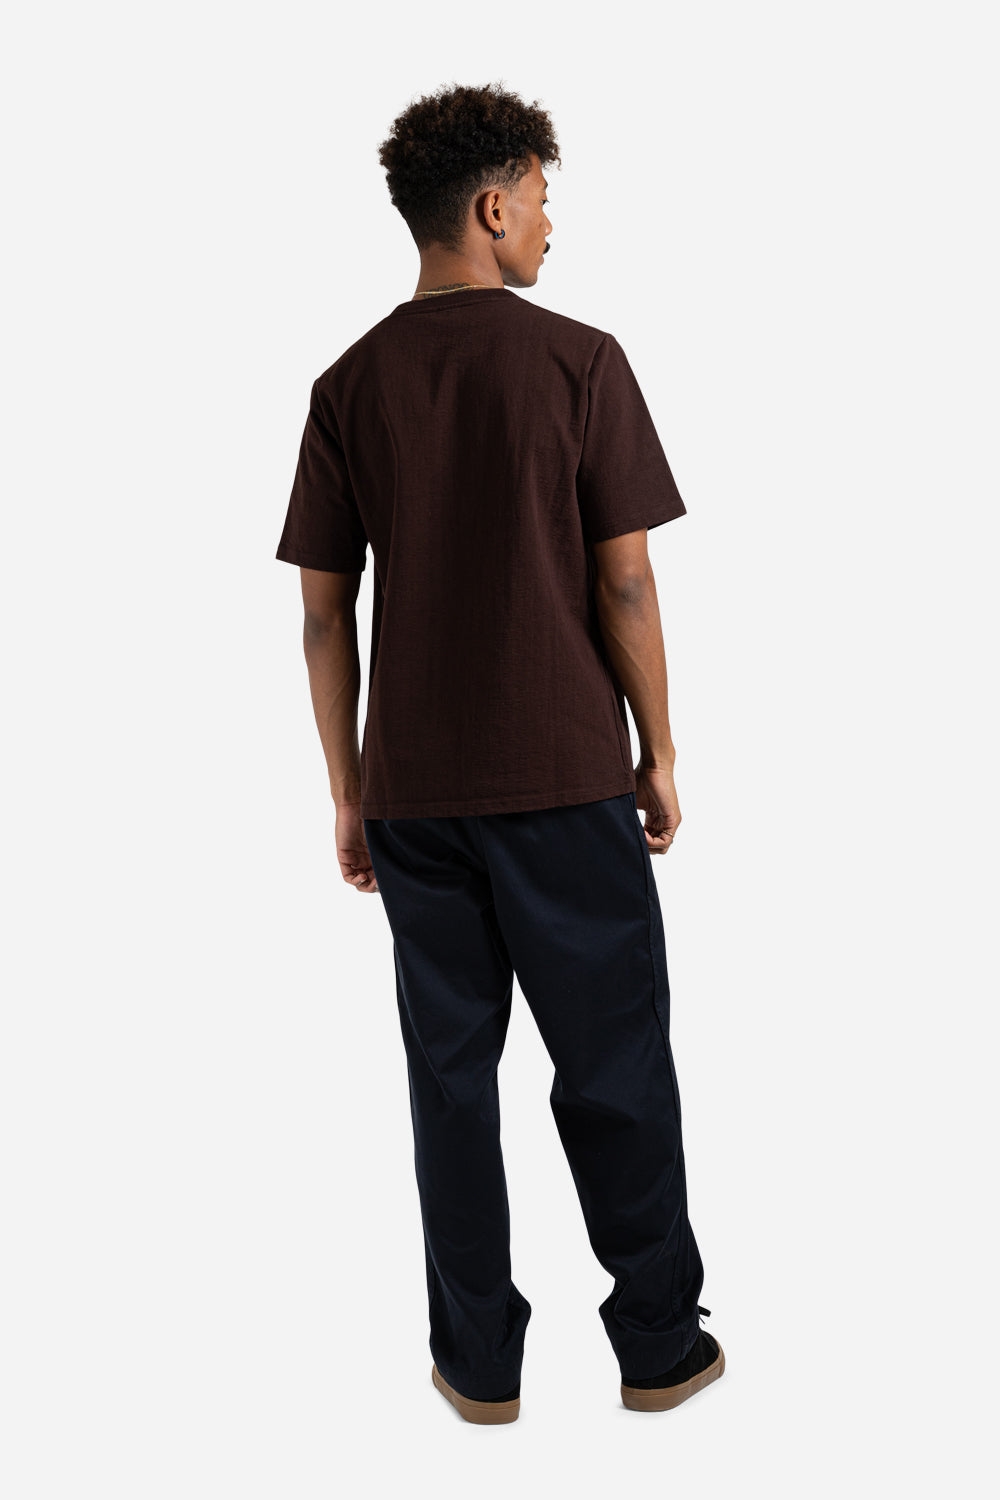 jackman-dotsume-pocket-t-shirt-black-brown